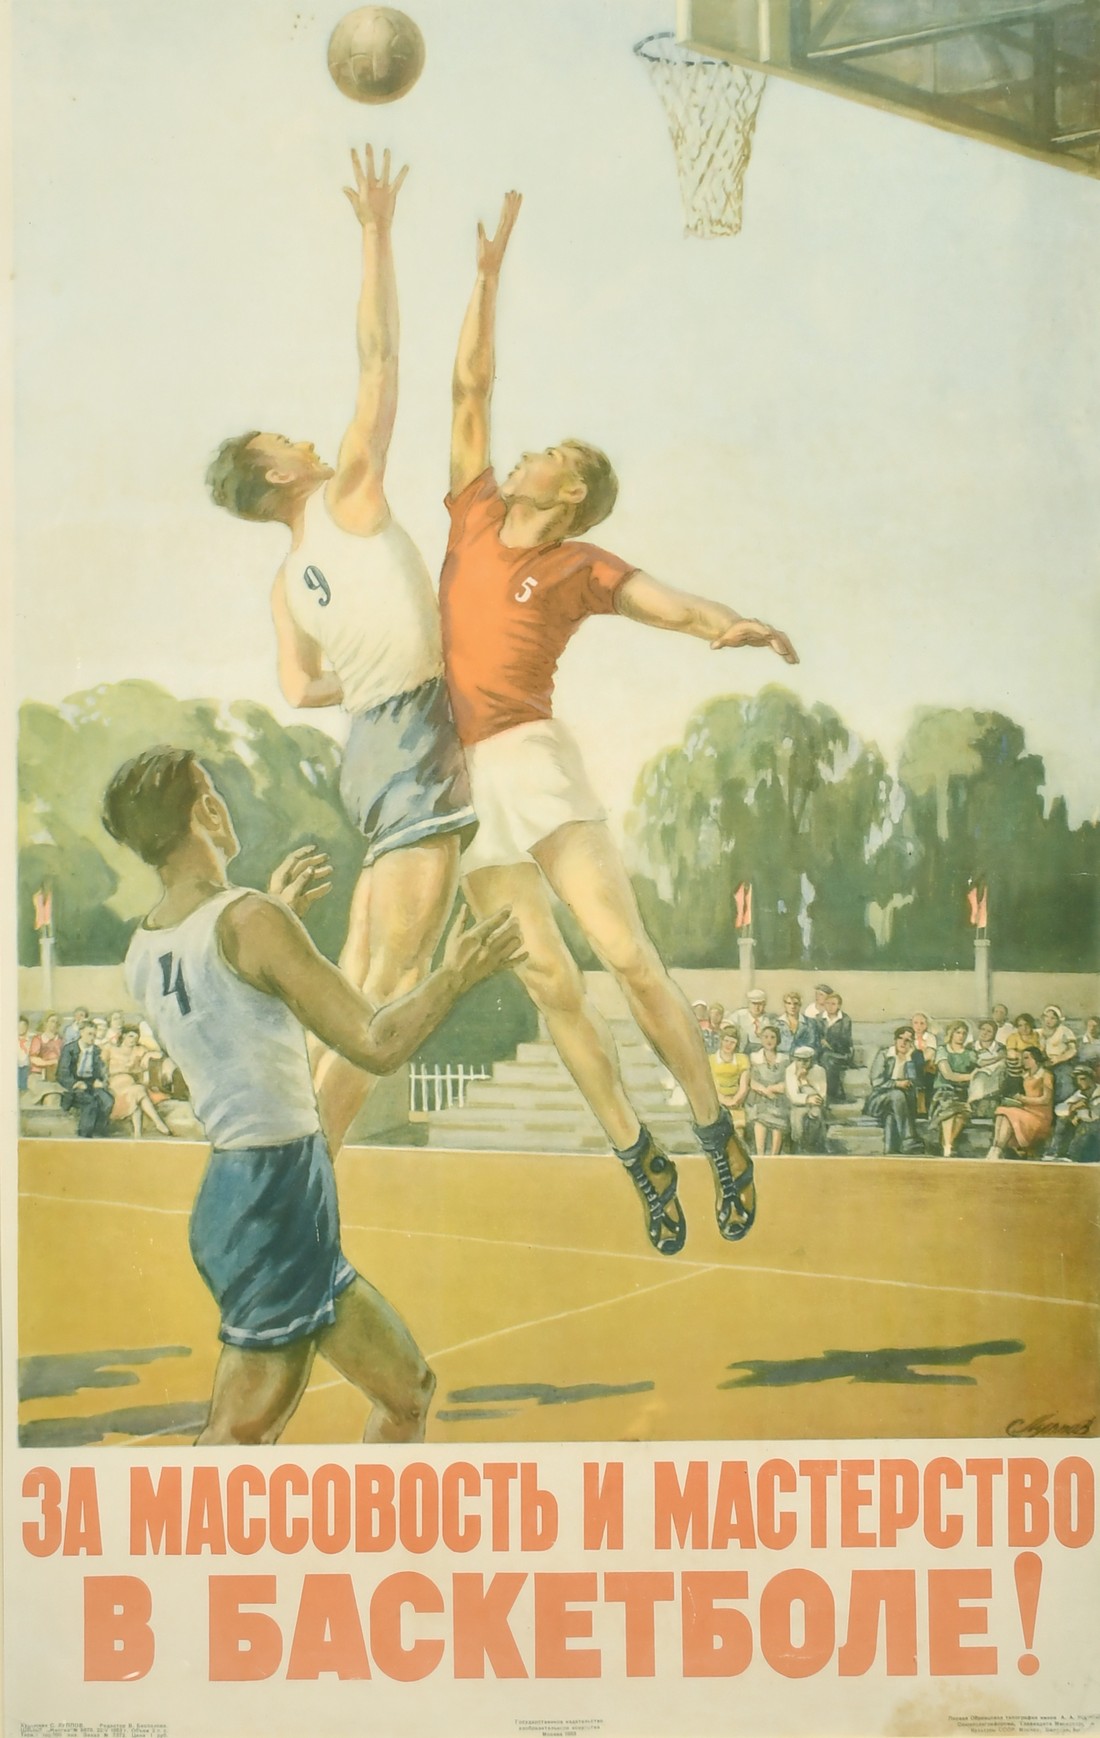 Russian, Circa 1953, a framed poster advertising a basketball tournament, 33" x 21.5".